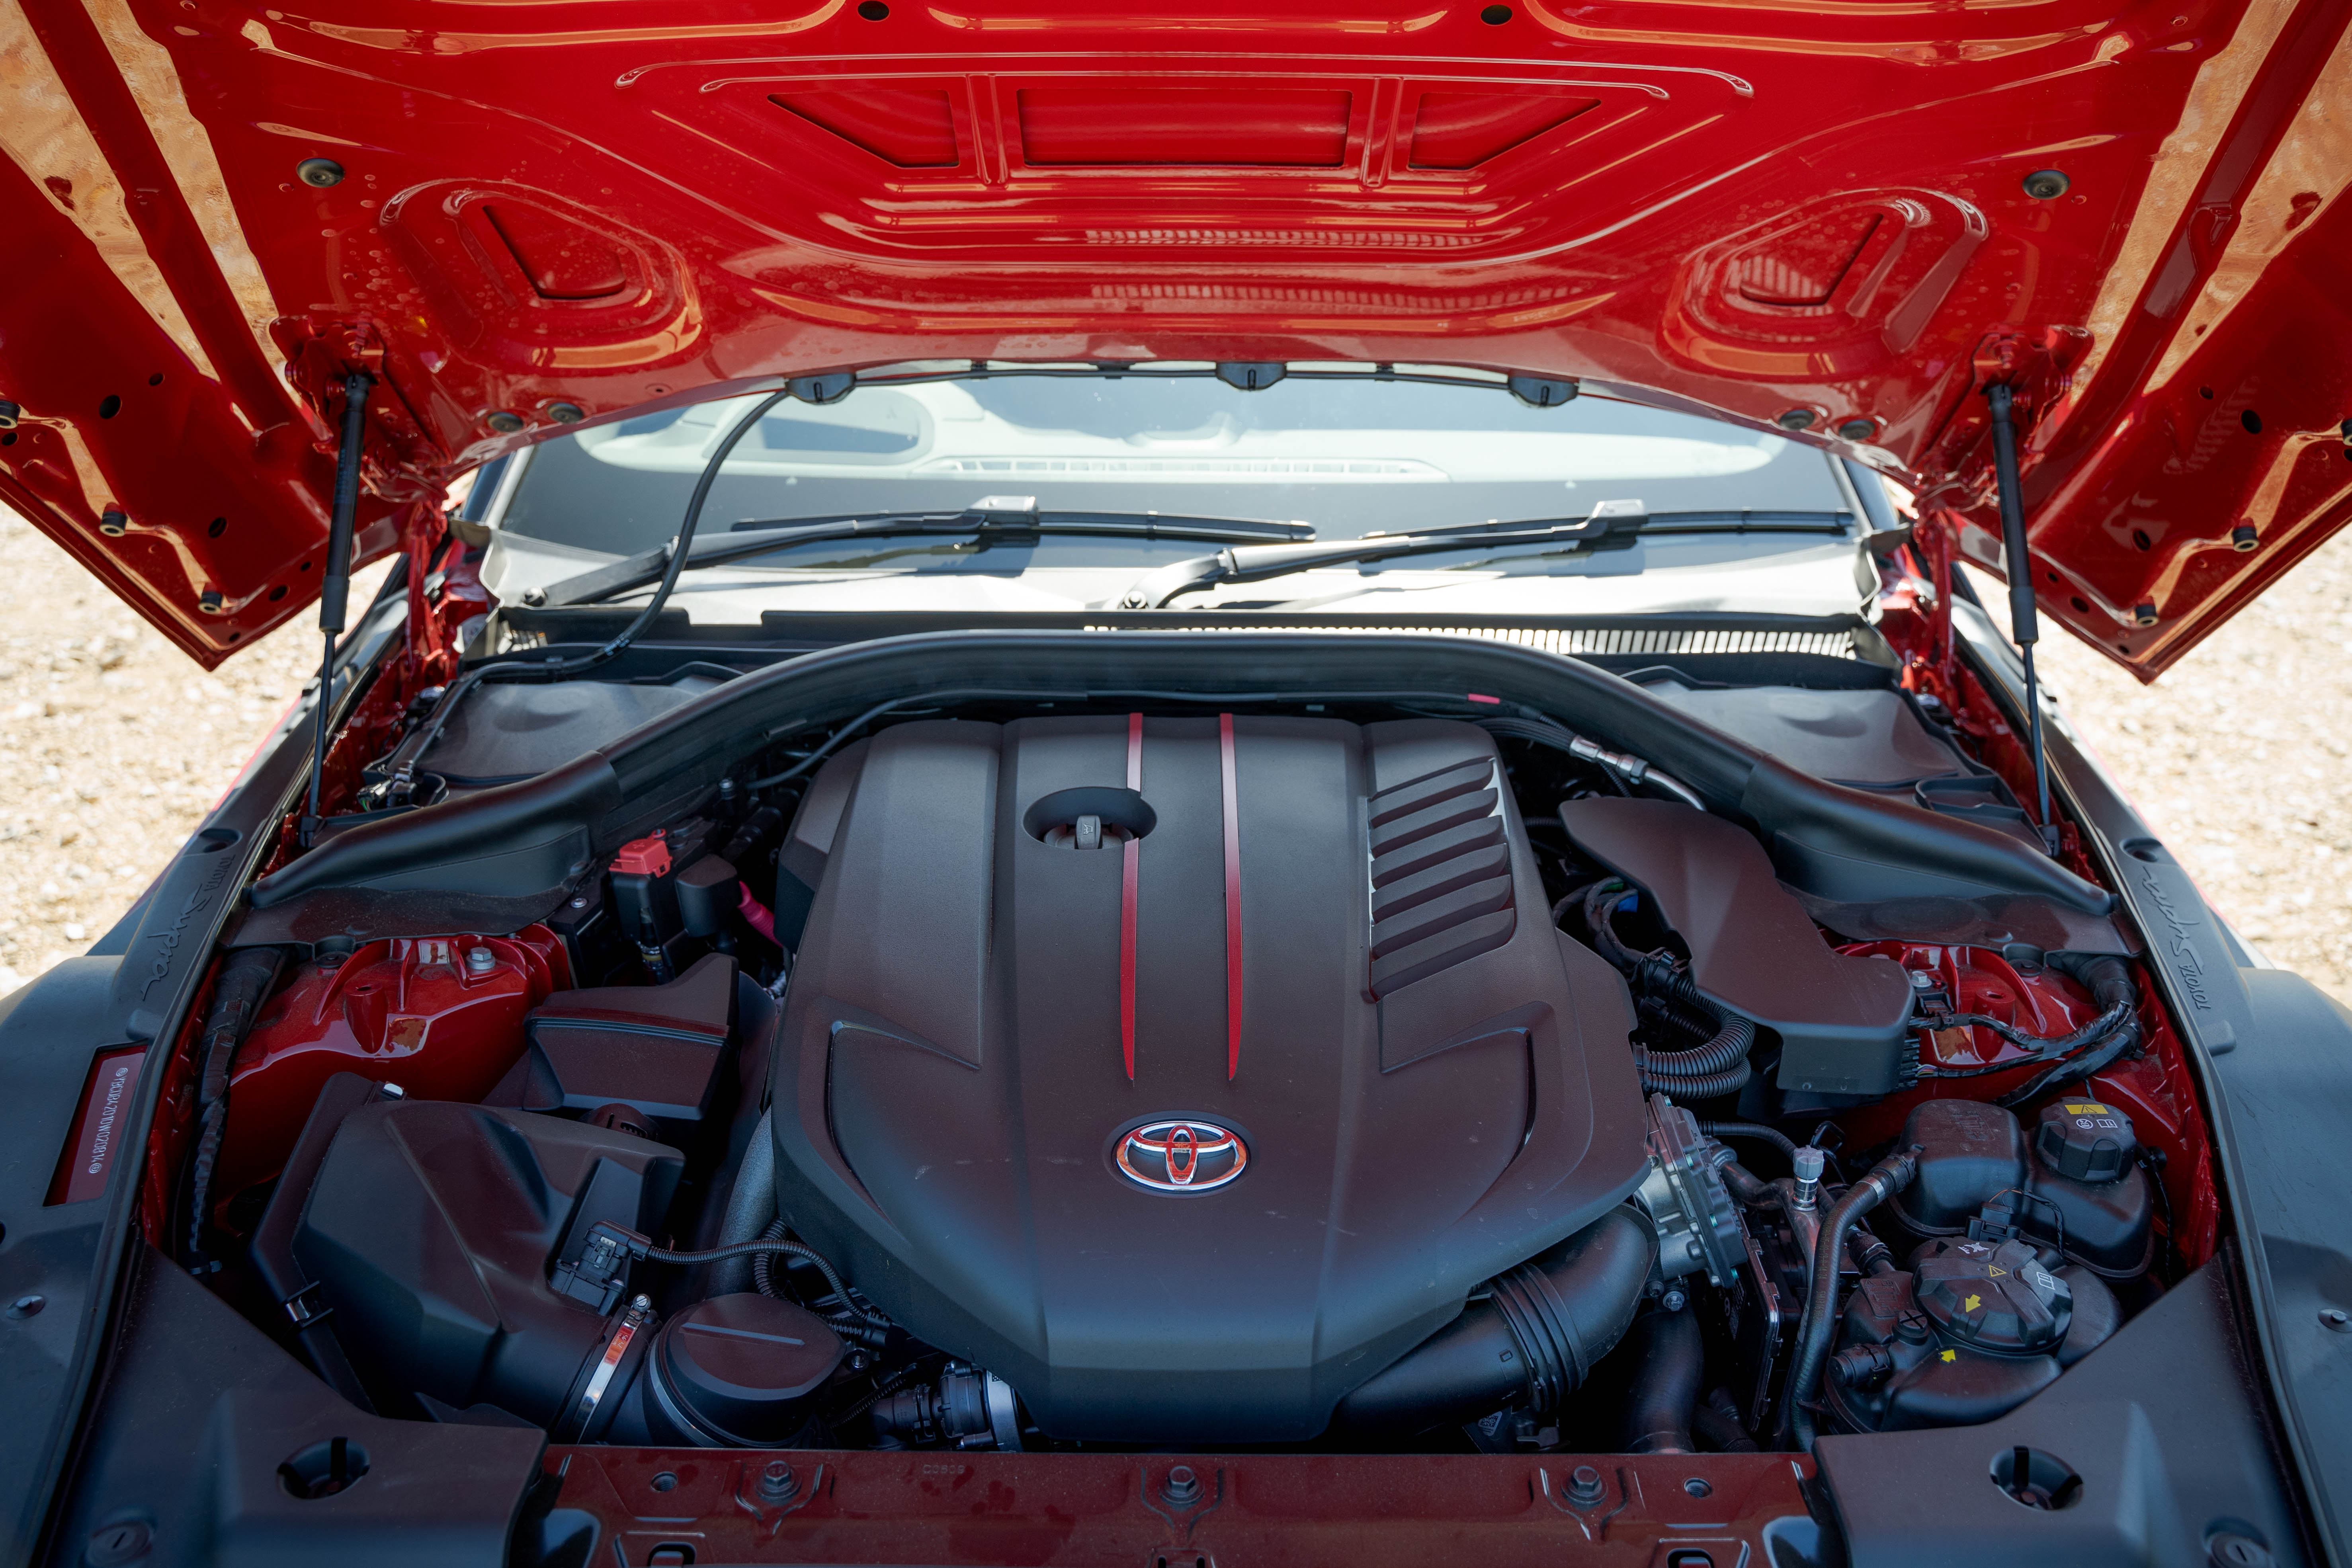 The Supra uses a turbocharged 3.0-litre straight-six engine